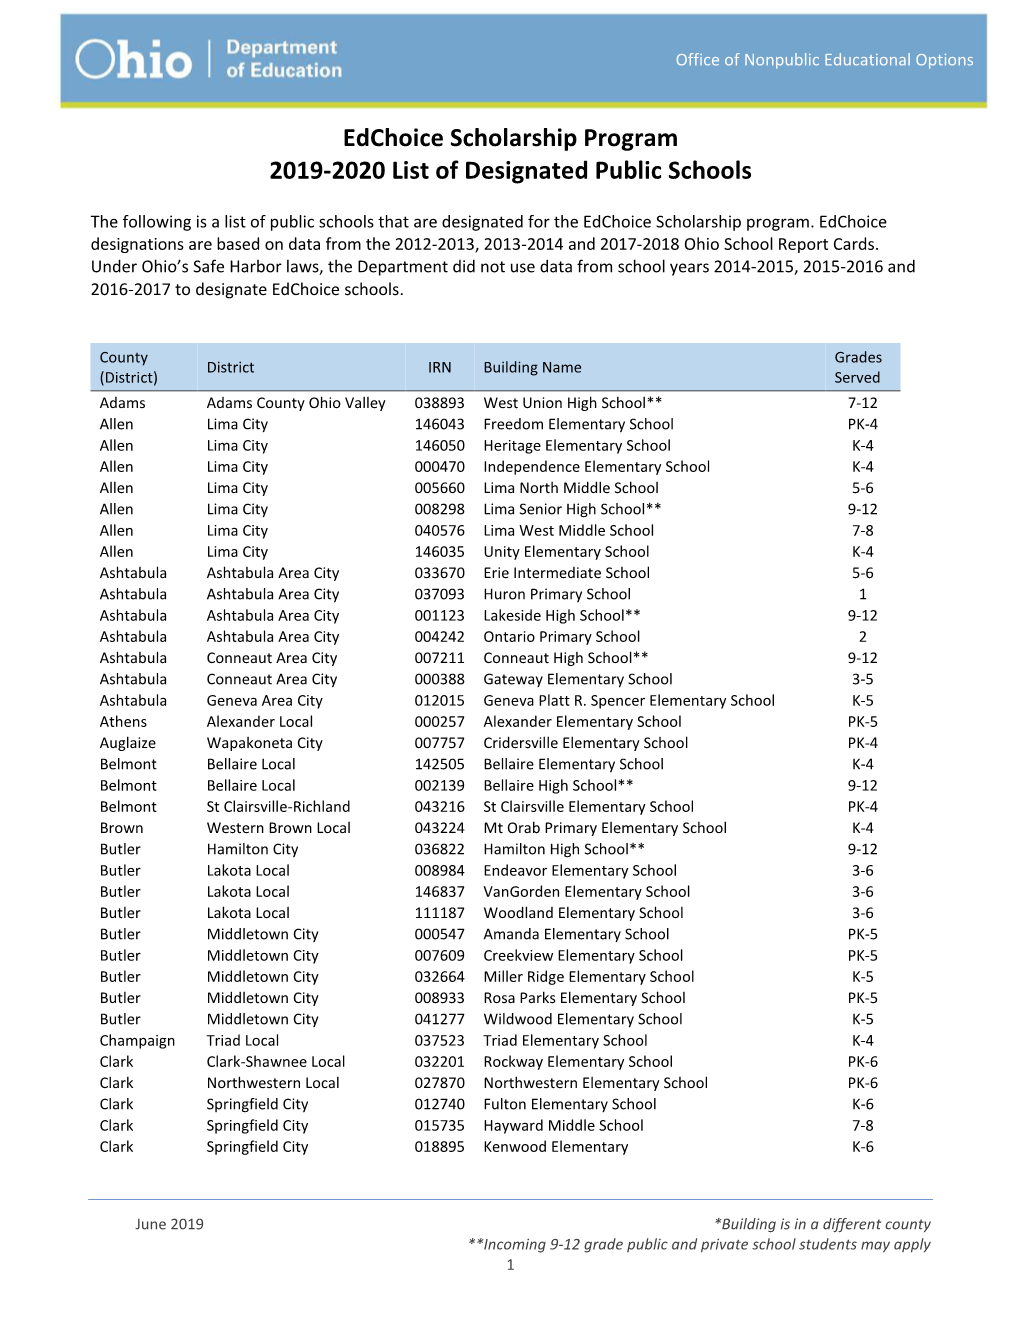 2019-2020 Edchoice Designated School List